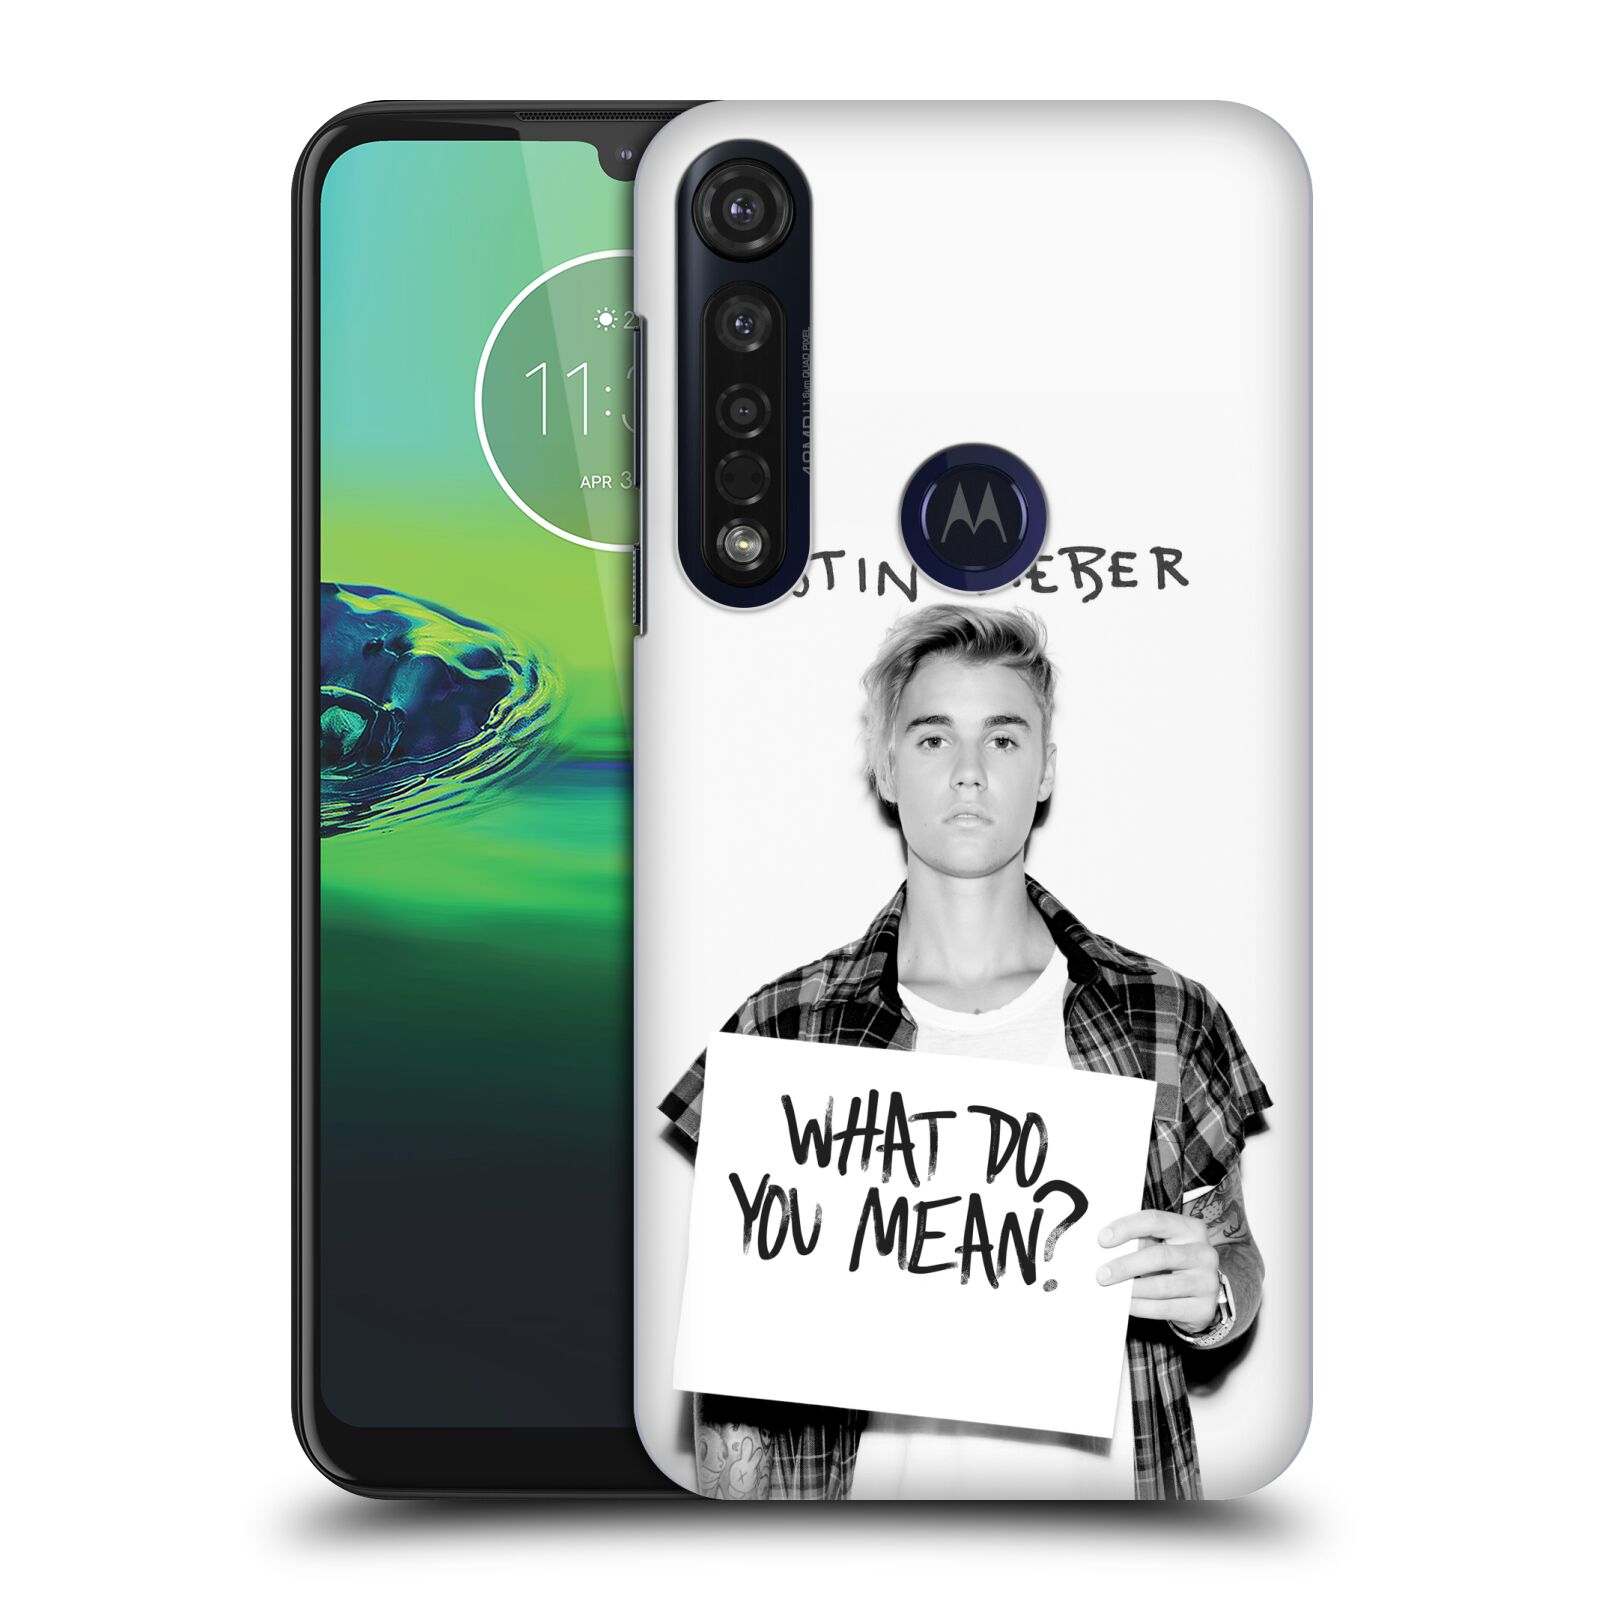 Pouzdro na mobil Motorola Moto G8 PLUS - HEAD CASE - Justin Bieber foto Purpose What do you mean